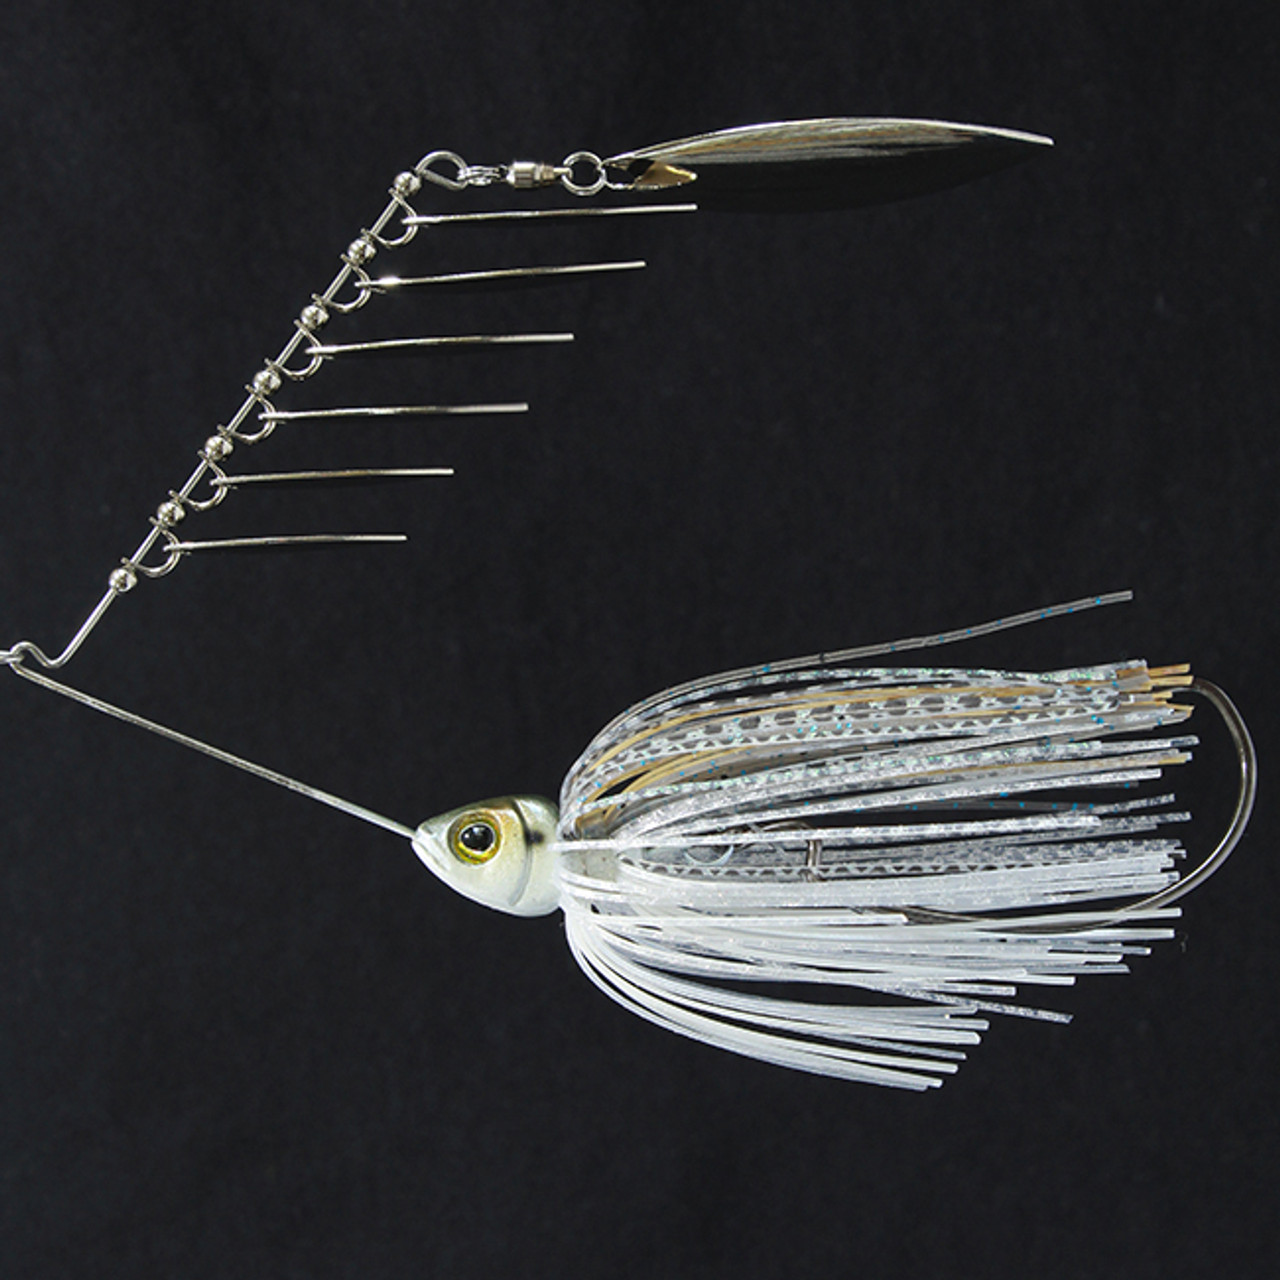 10 Hand Made Silicone Spinnerbait Skirts (White Baitfish) - Bass Fishing -  NEW